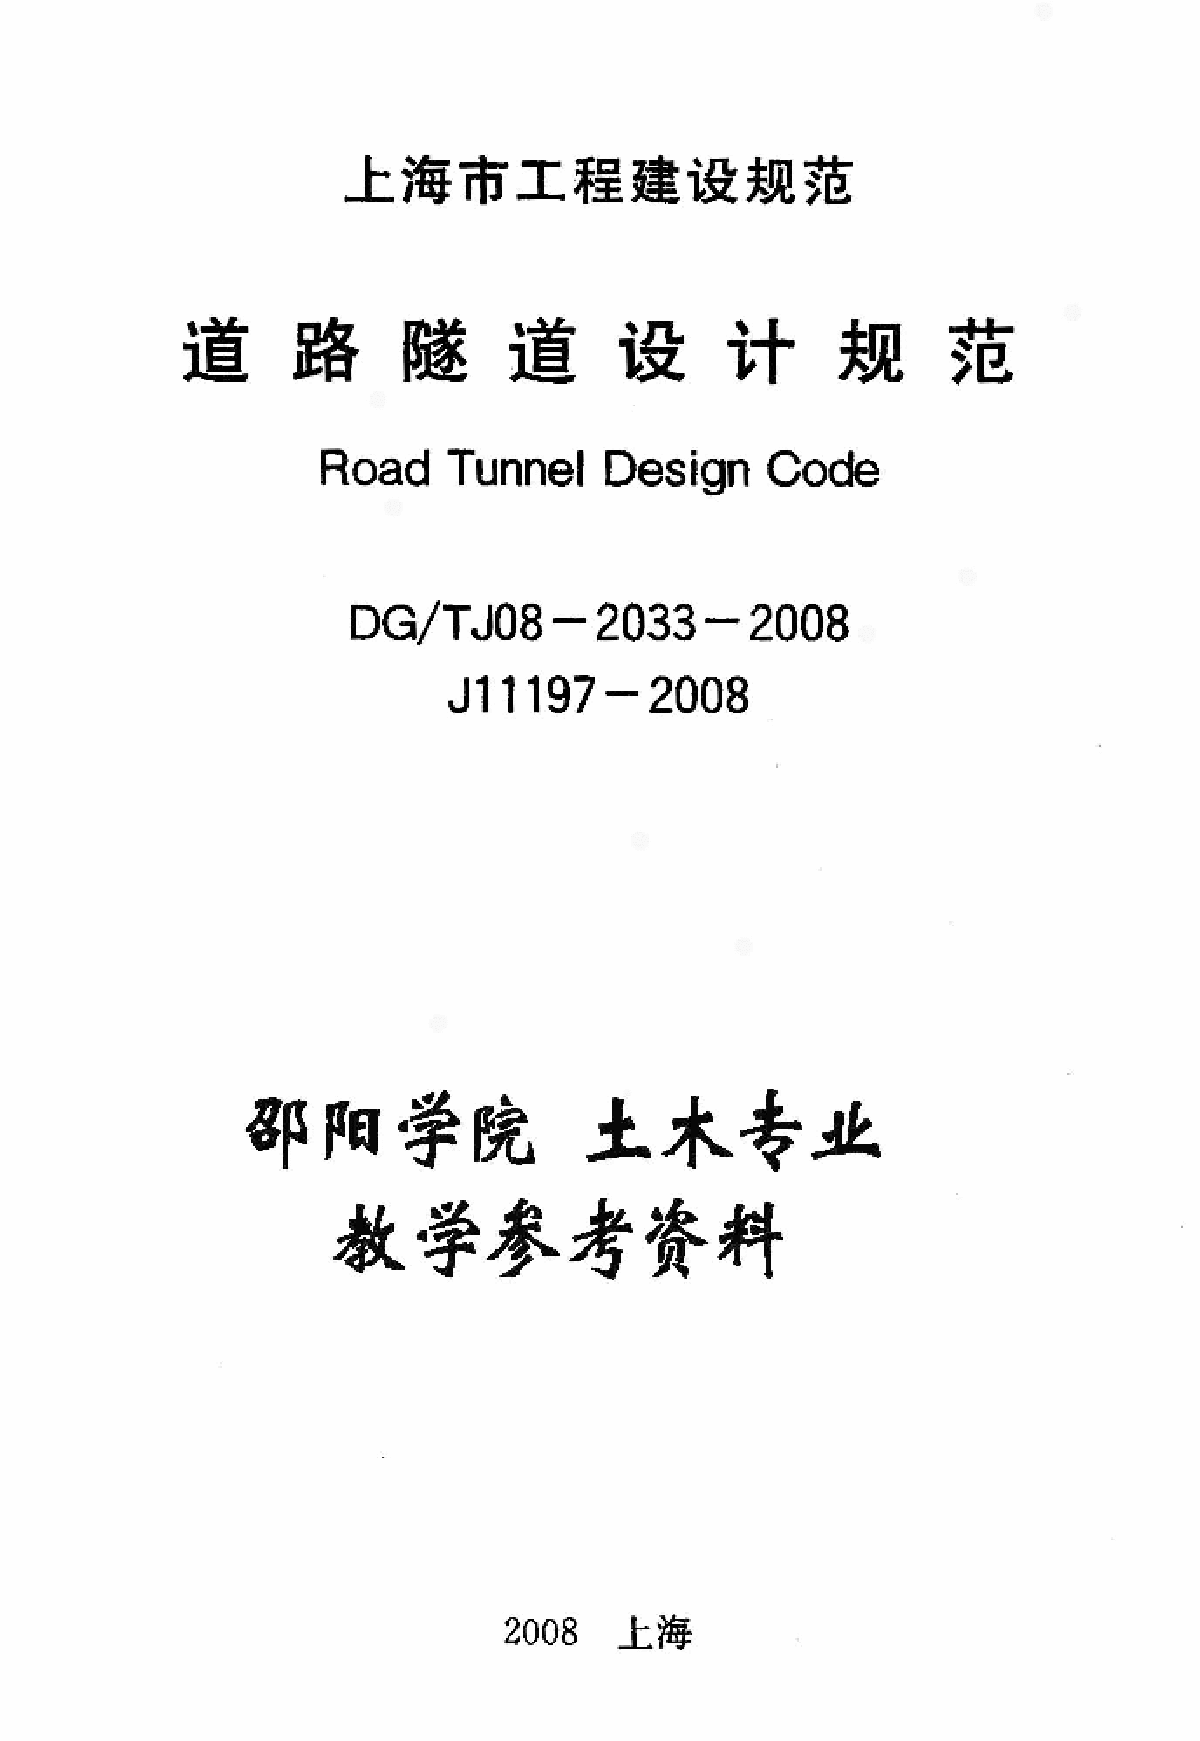 DGTJ08-2033-2008 道路隧道设计规范-图一